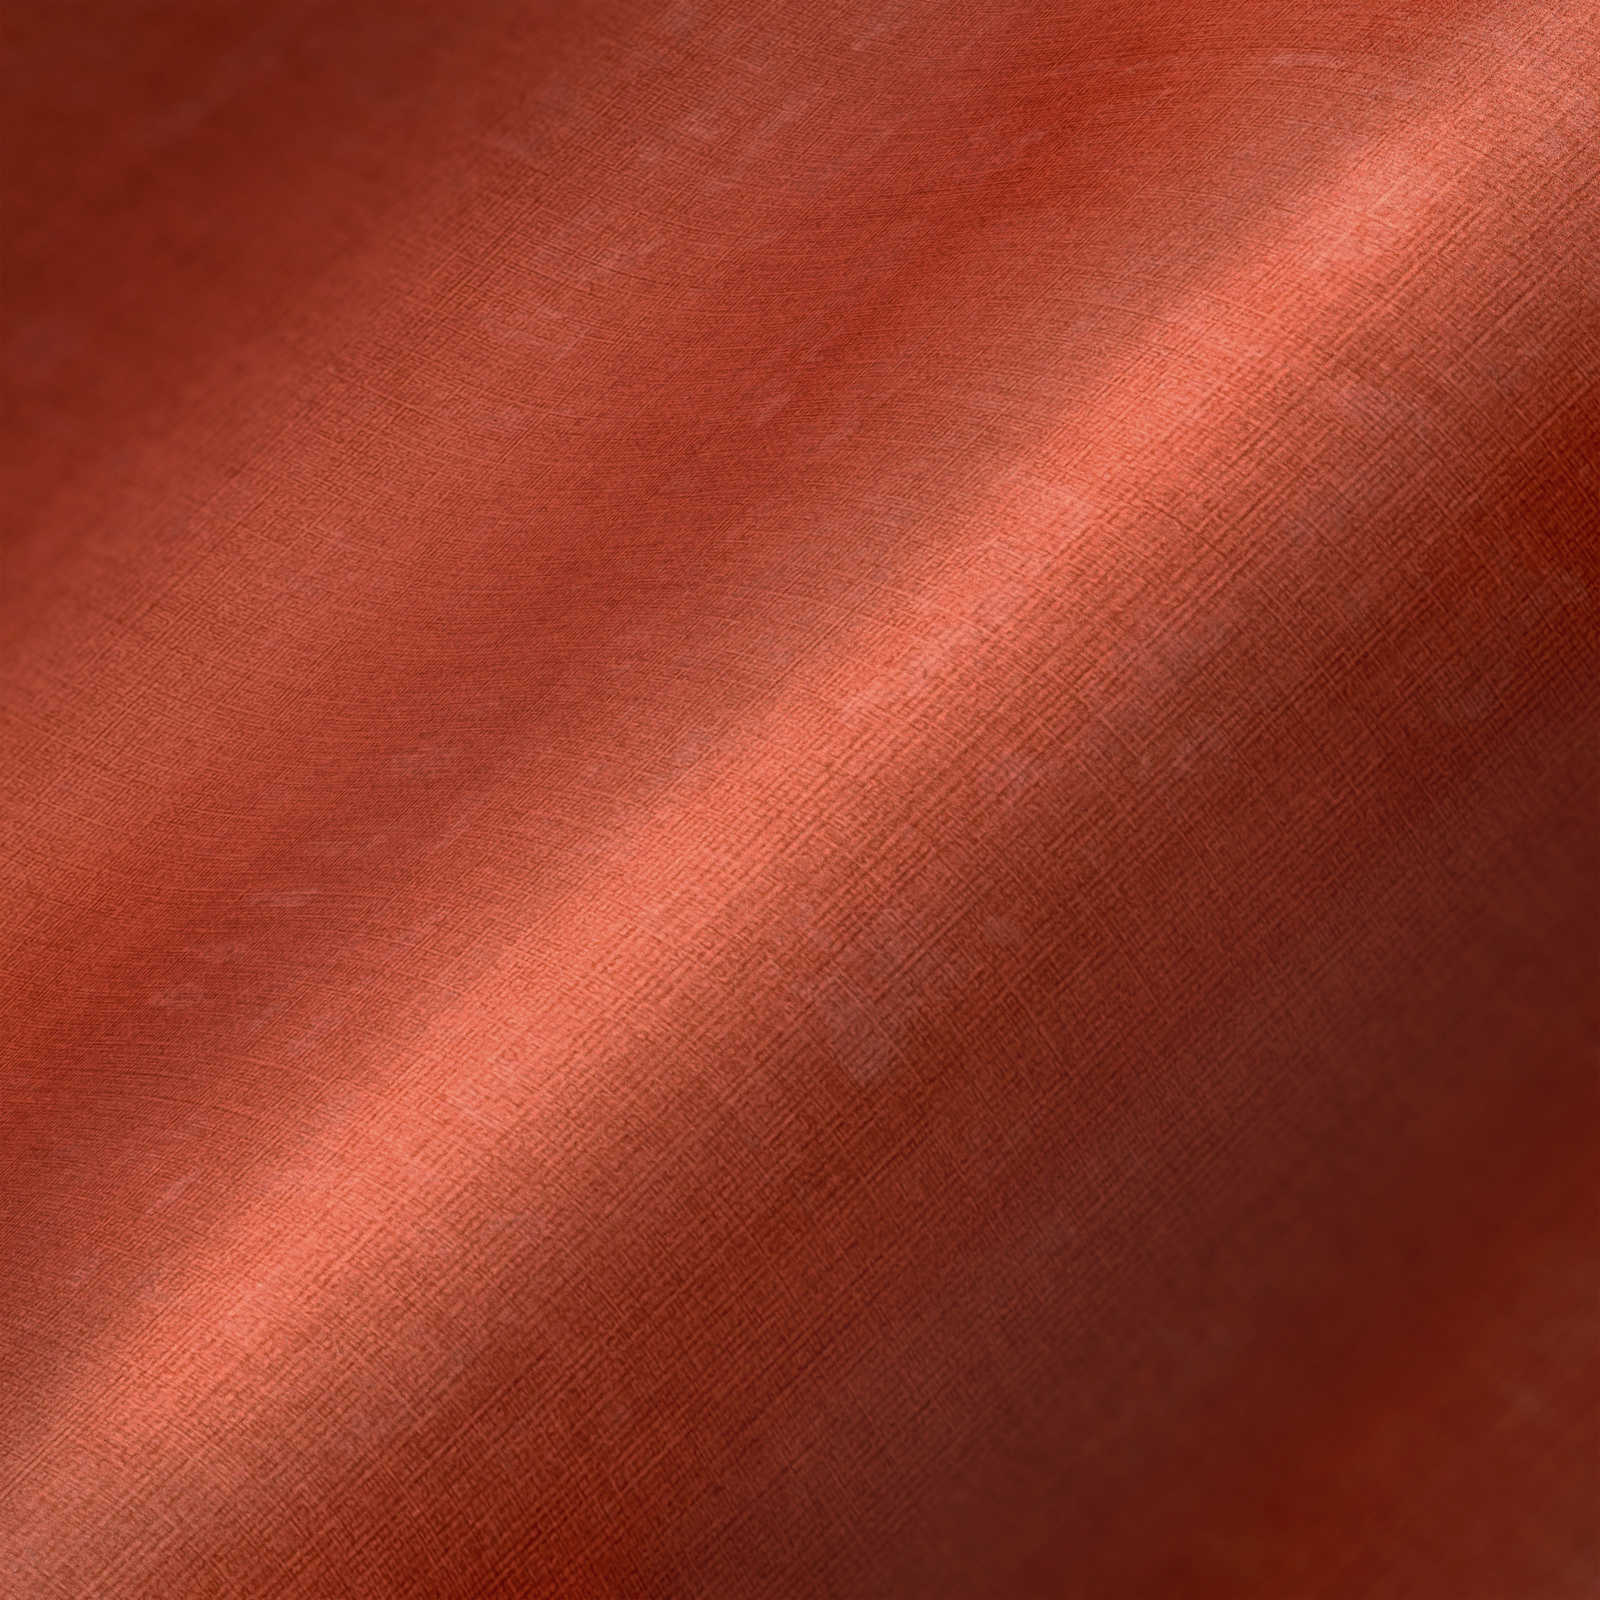             Plain wallpaper with mottled pattern - orange, red
        